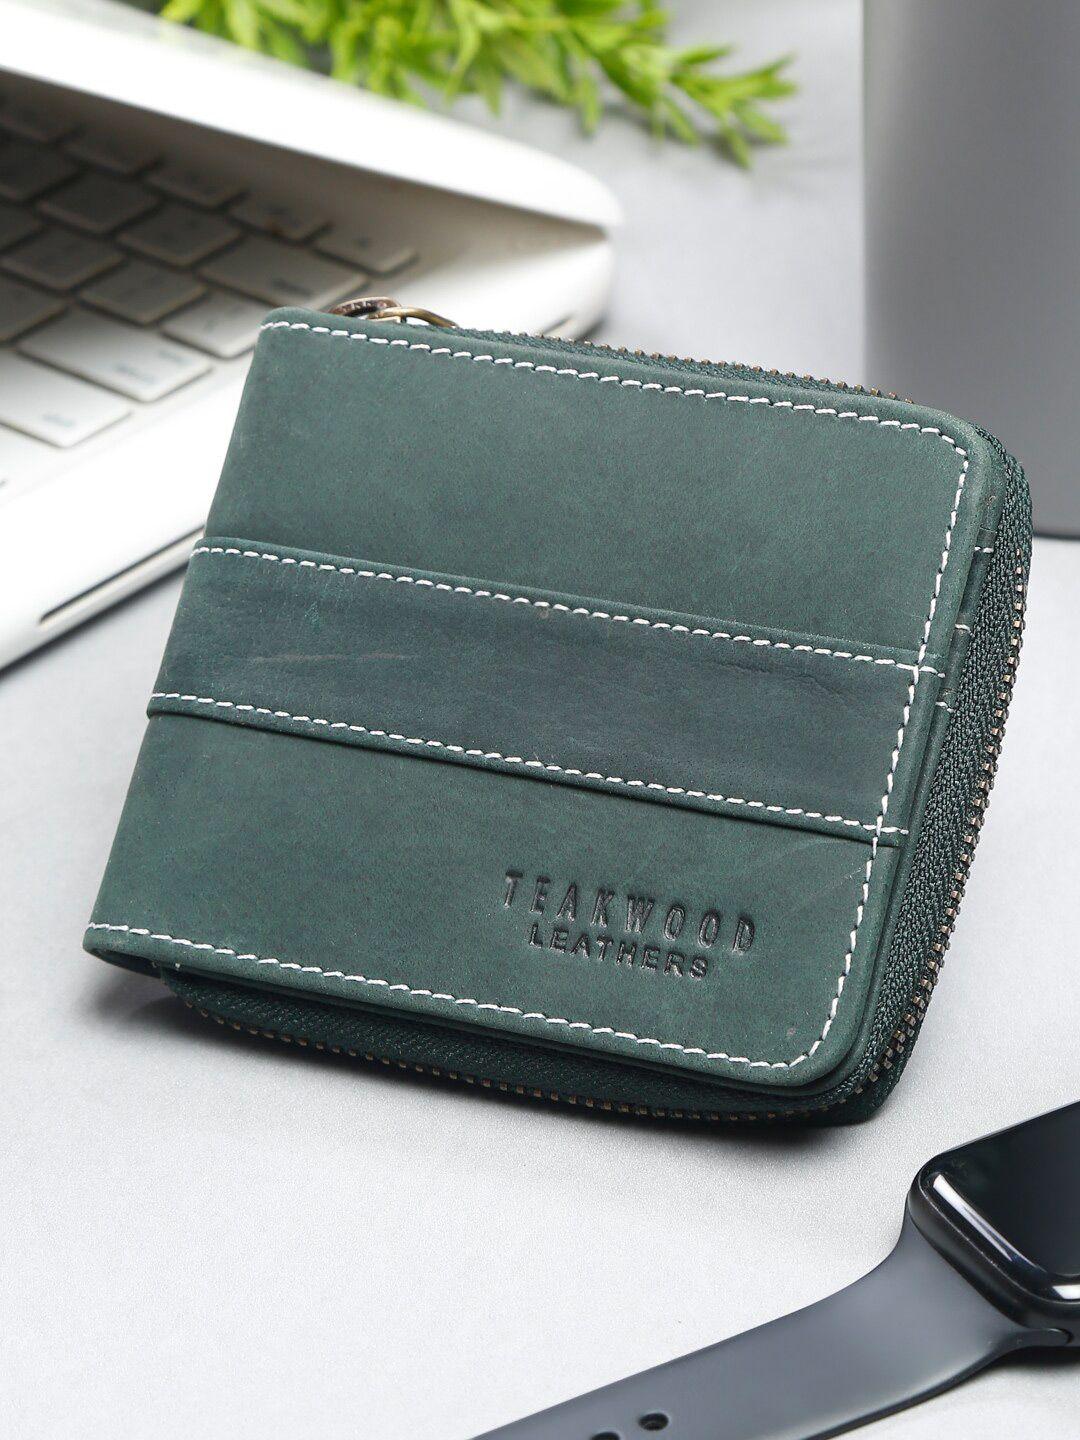 teakwood leathers men leather zip around wallet